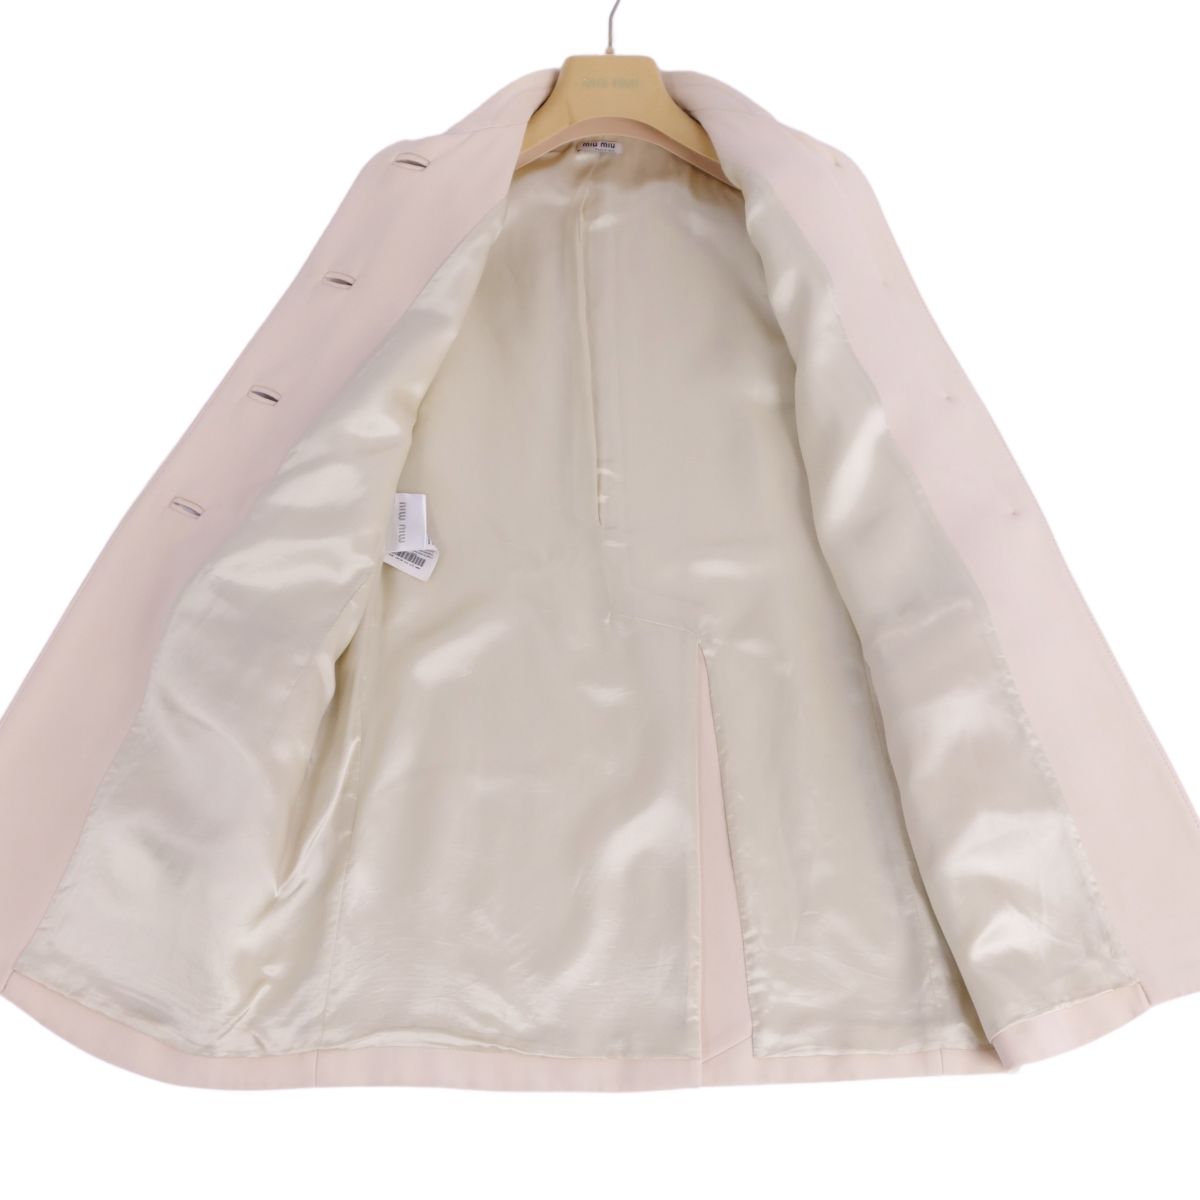 Miu Miu coat stain colour coat balmcorn coat view button out  38 (S equivalent) beige  仙台 楽天市場店